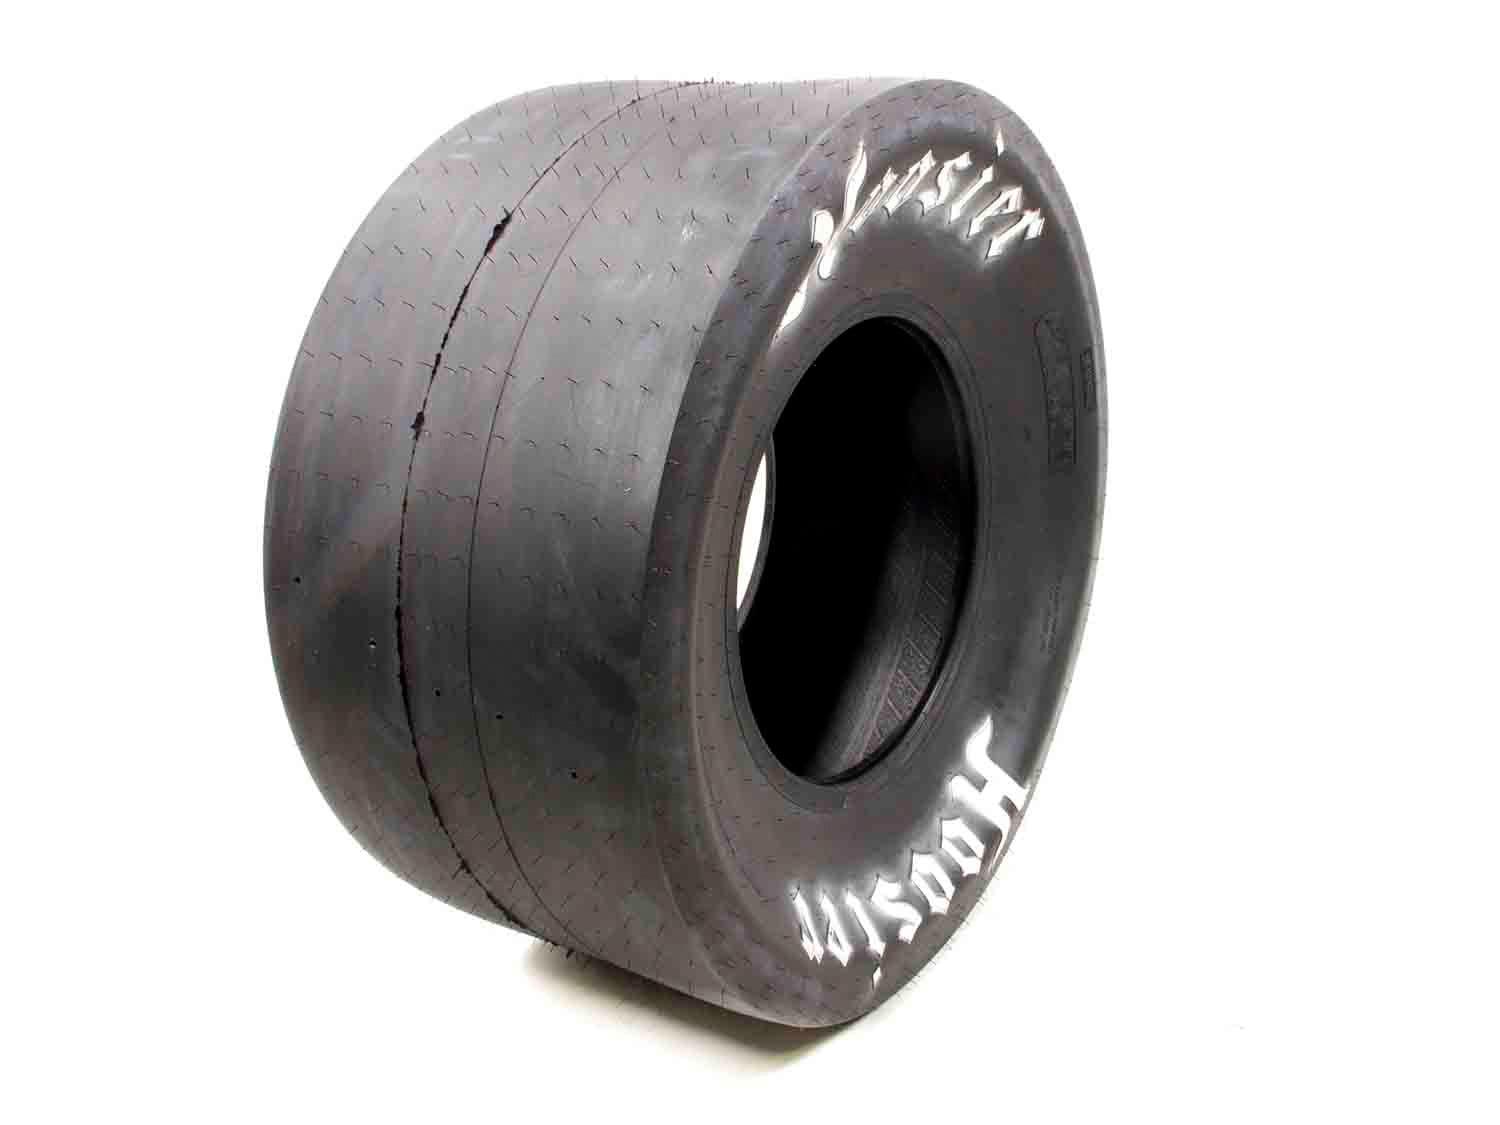 30.0/10.5R-15 Drag Tire - Burlile Performance Products